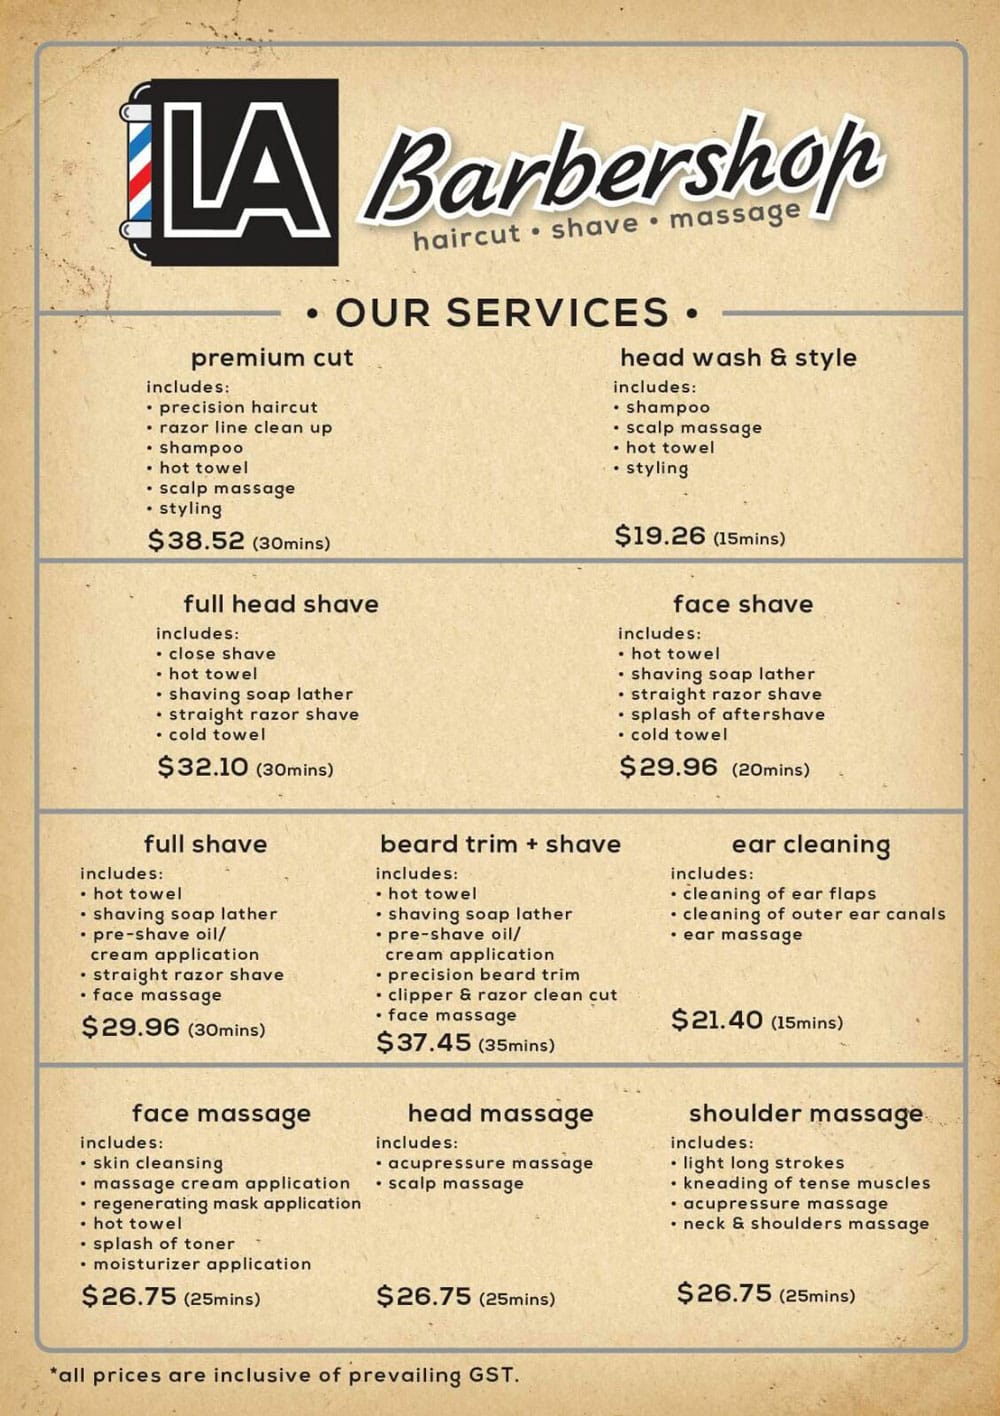 la-barbershop-services